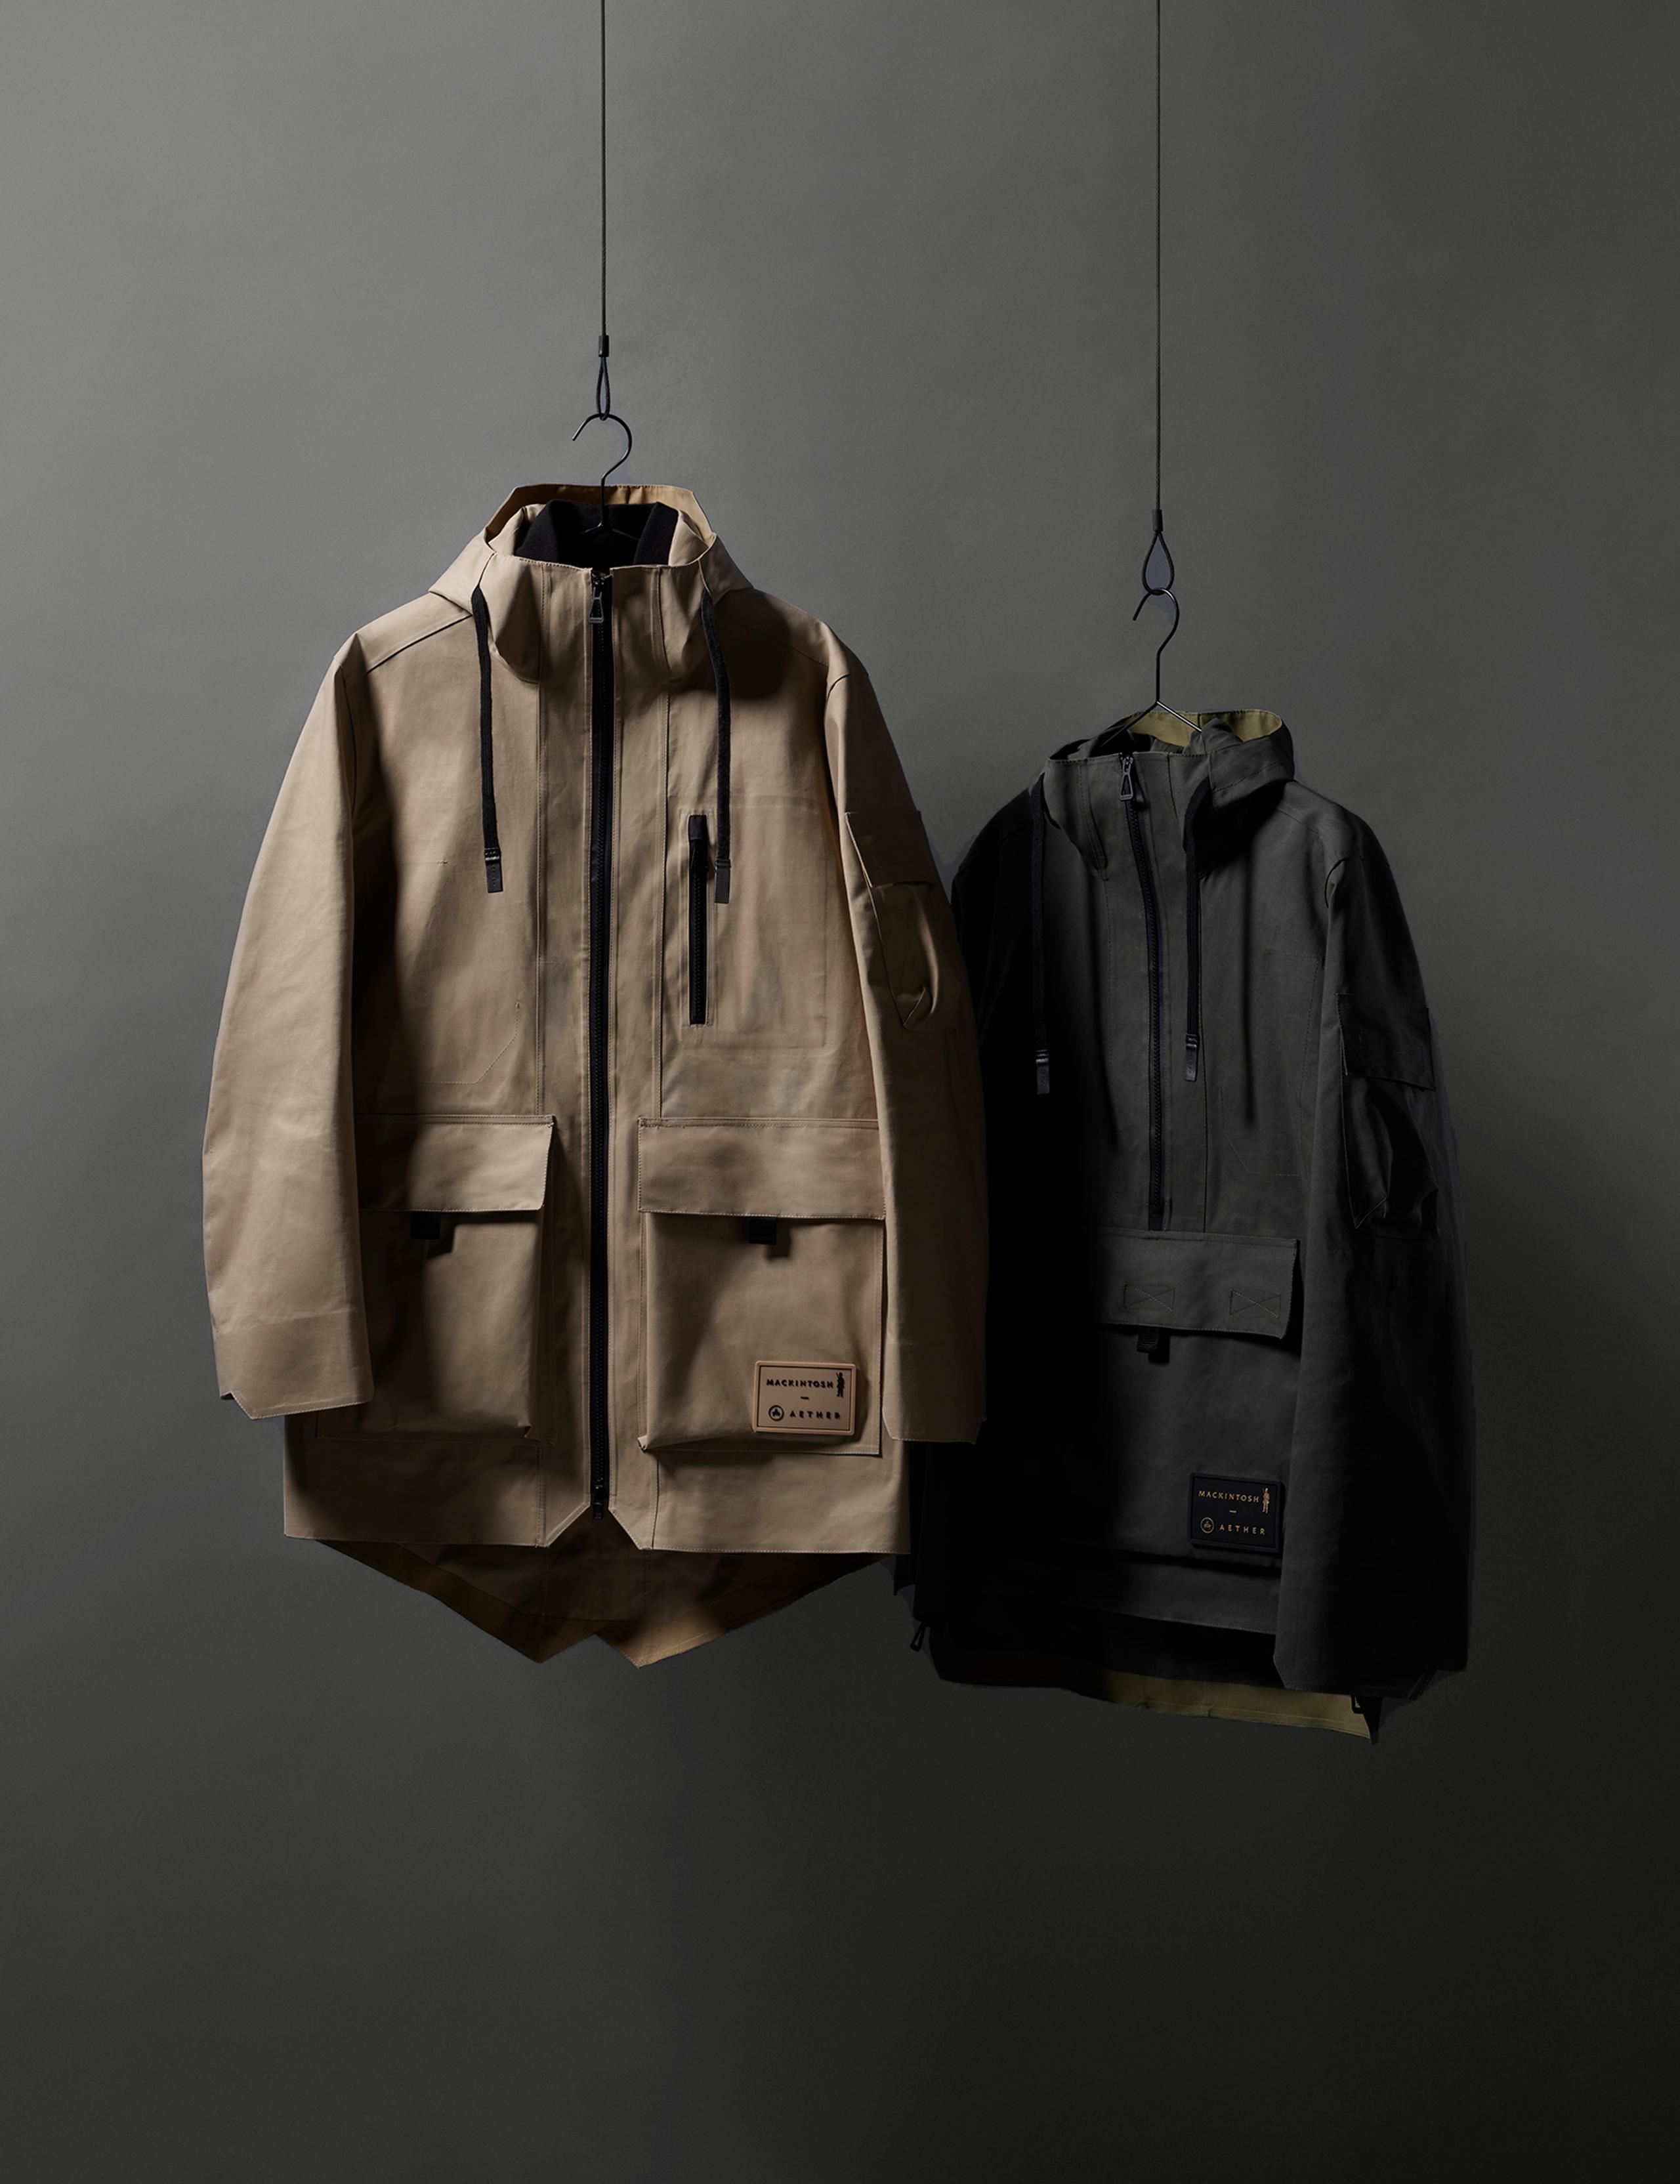 Studio photo of Mackintosh Field Jacket and Anorak hanging from metal hangers against dark background